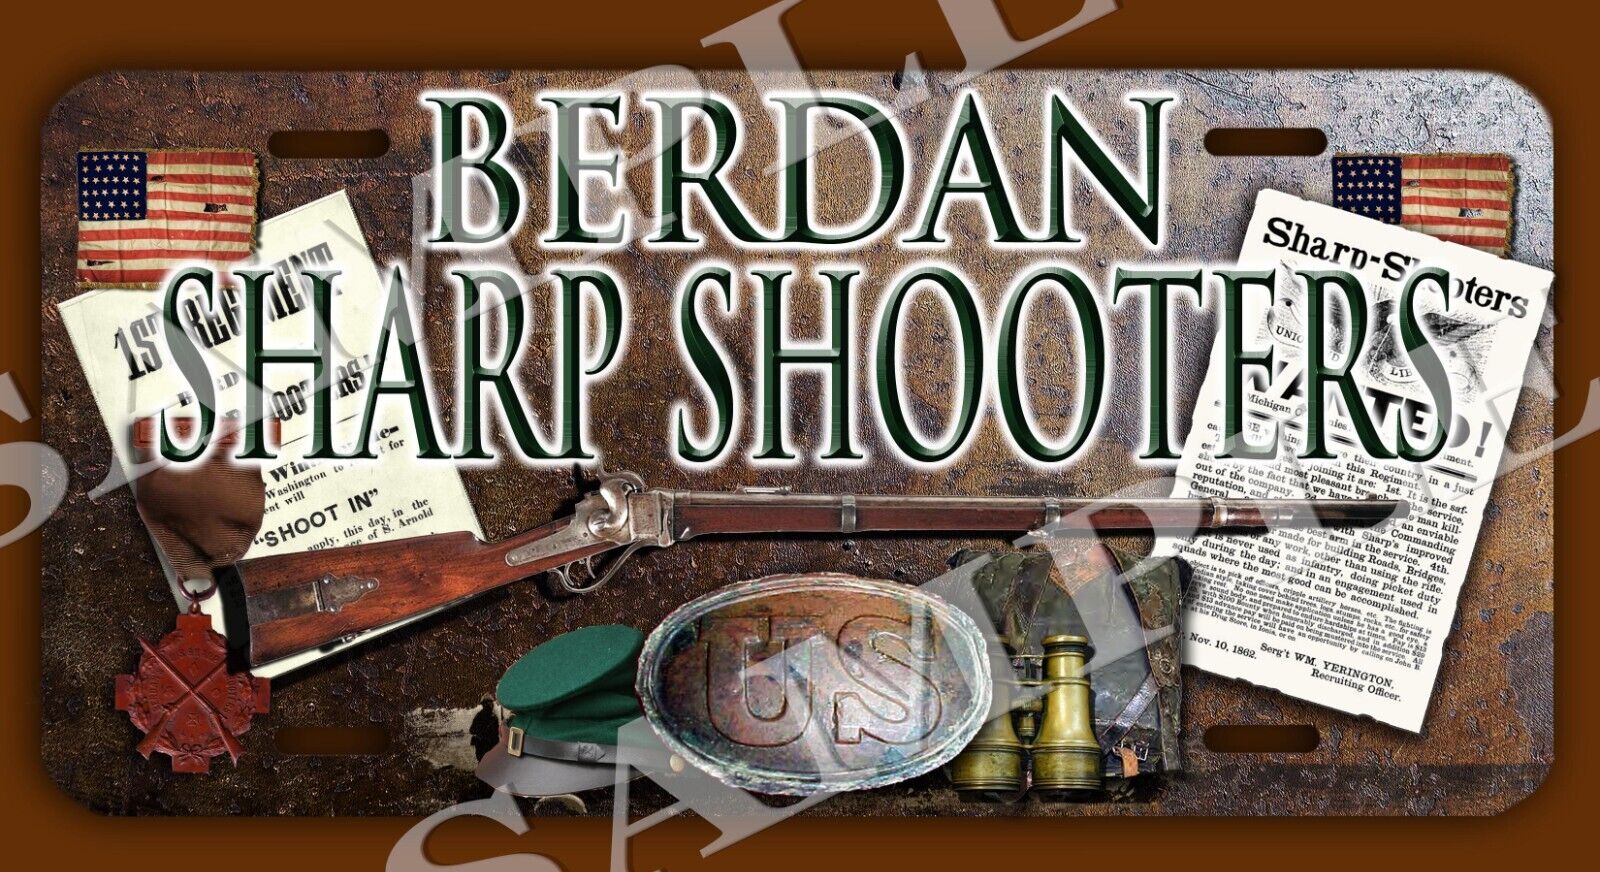 Berdan Sharpshooters American Civil War Themed vehicle license plate